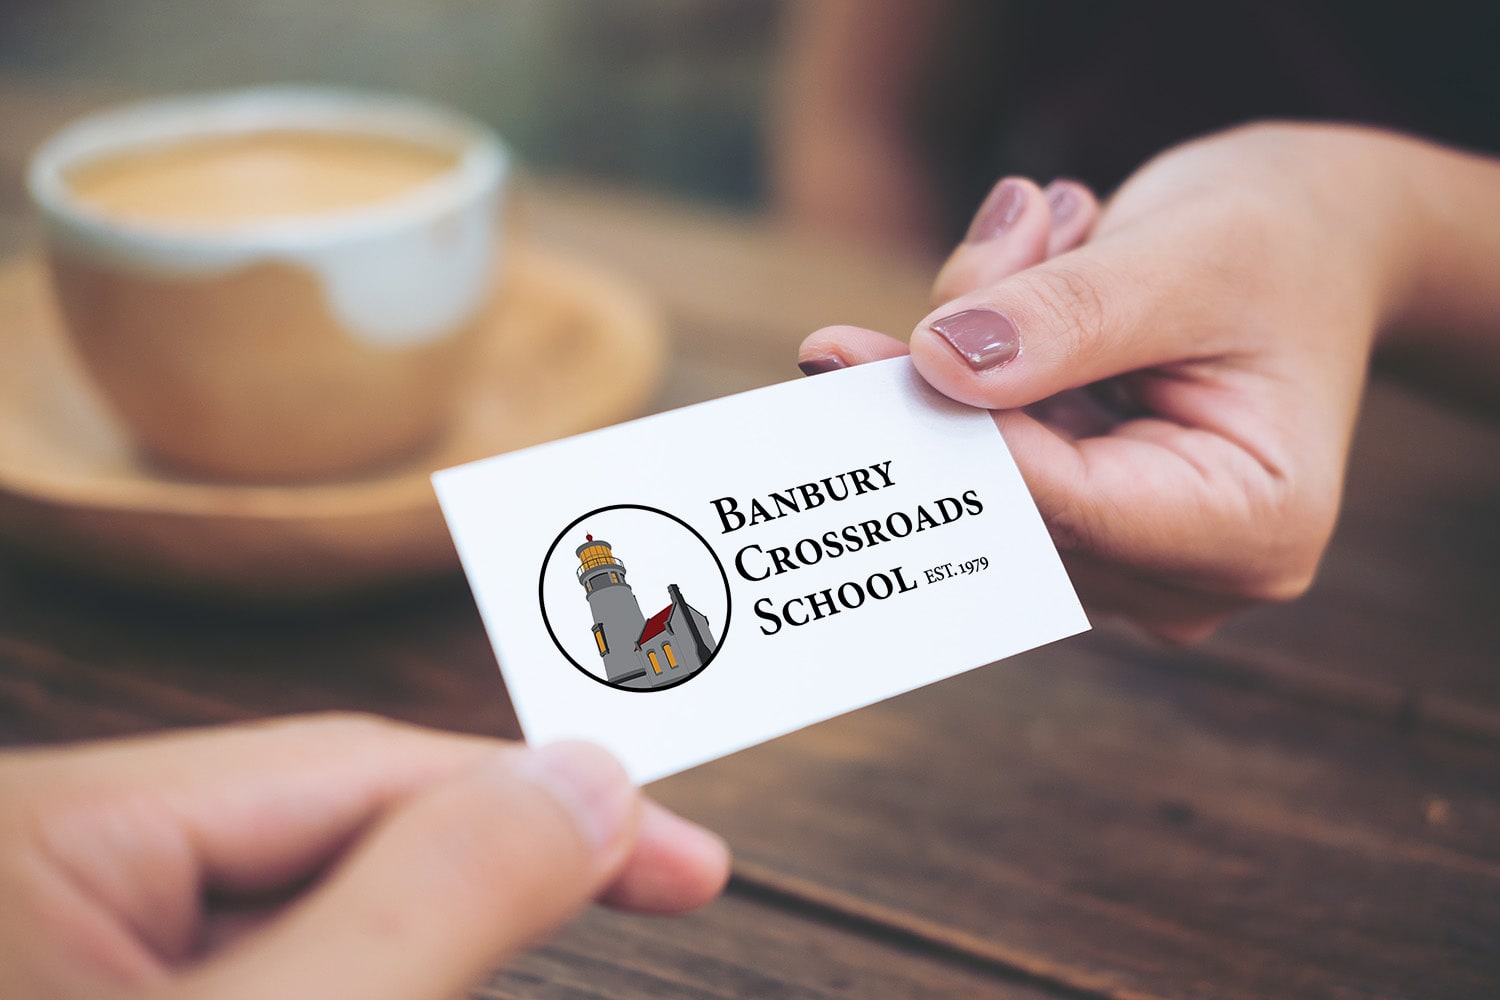 Banbury Crossroads School Business Card